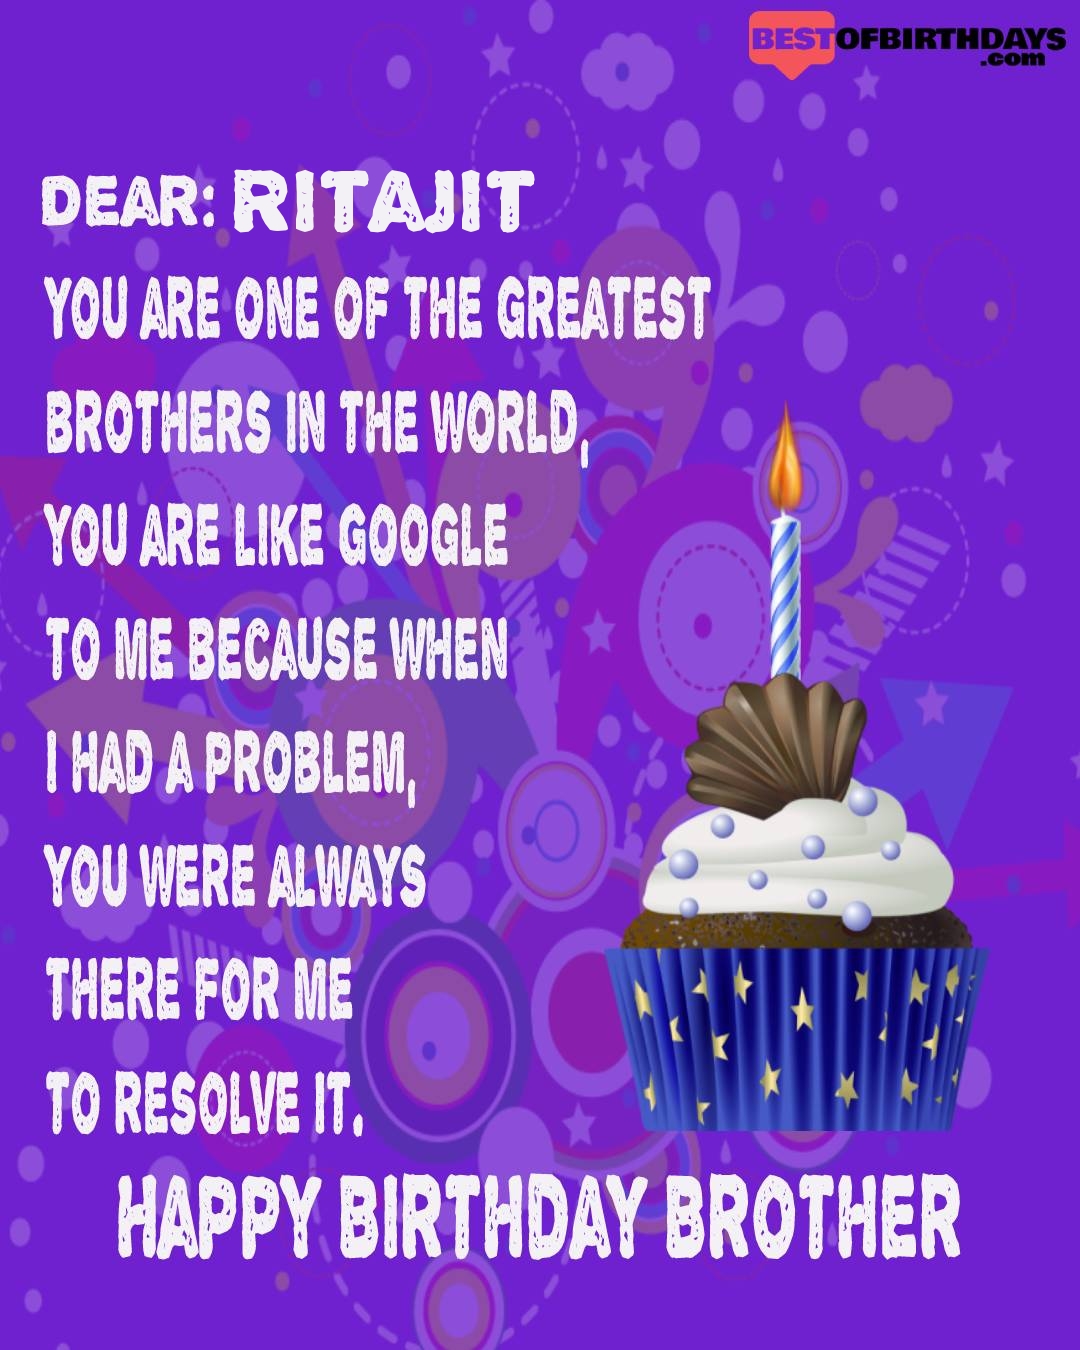 Happy birthday ritajit bhai brother bro